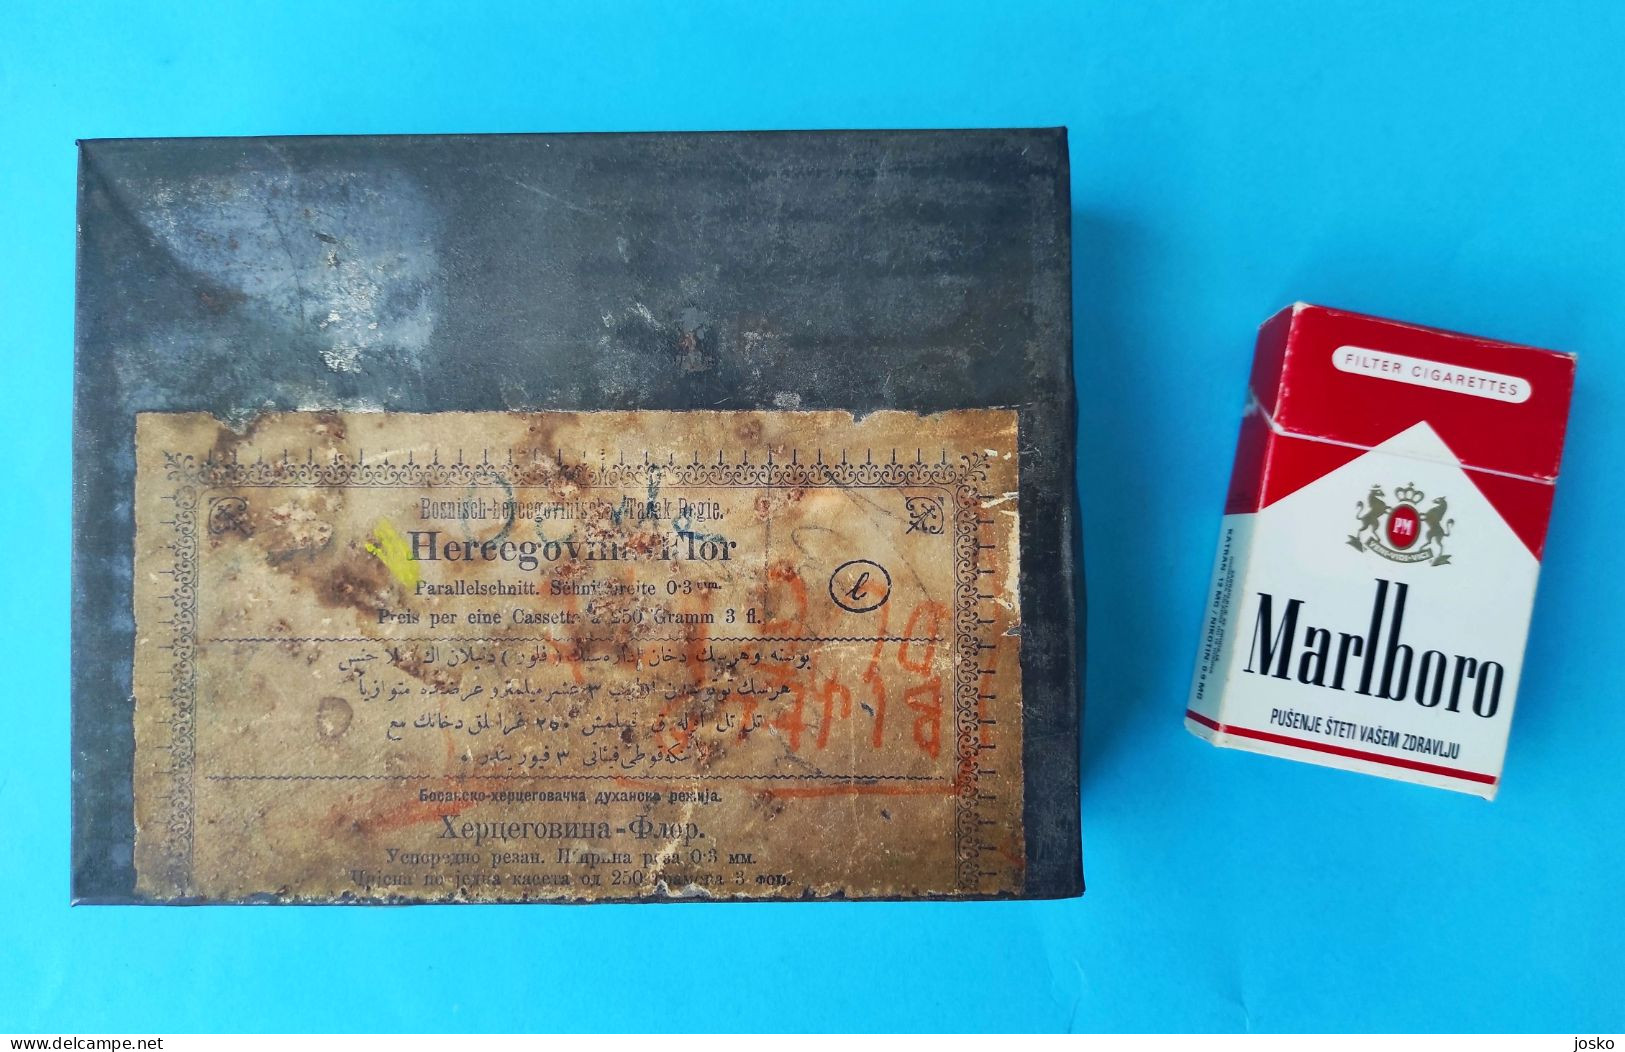 HERCEGOVINA FLOR - Bosnia And Herzegovina Antique Tobacco Tin Box (1883.y.) * Tabak Tabac Tabacco Tabaco Cigarettes - Schnupftabakdosen (leer)